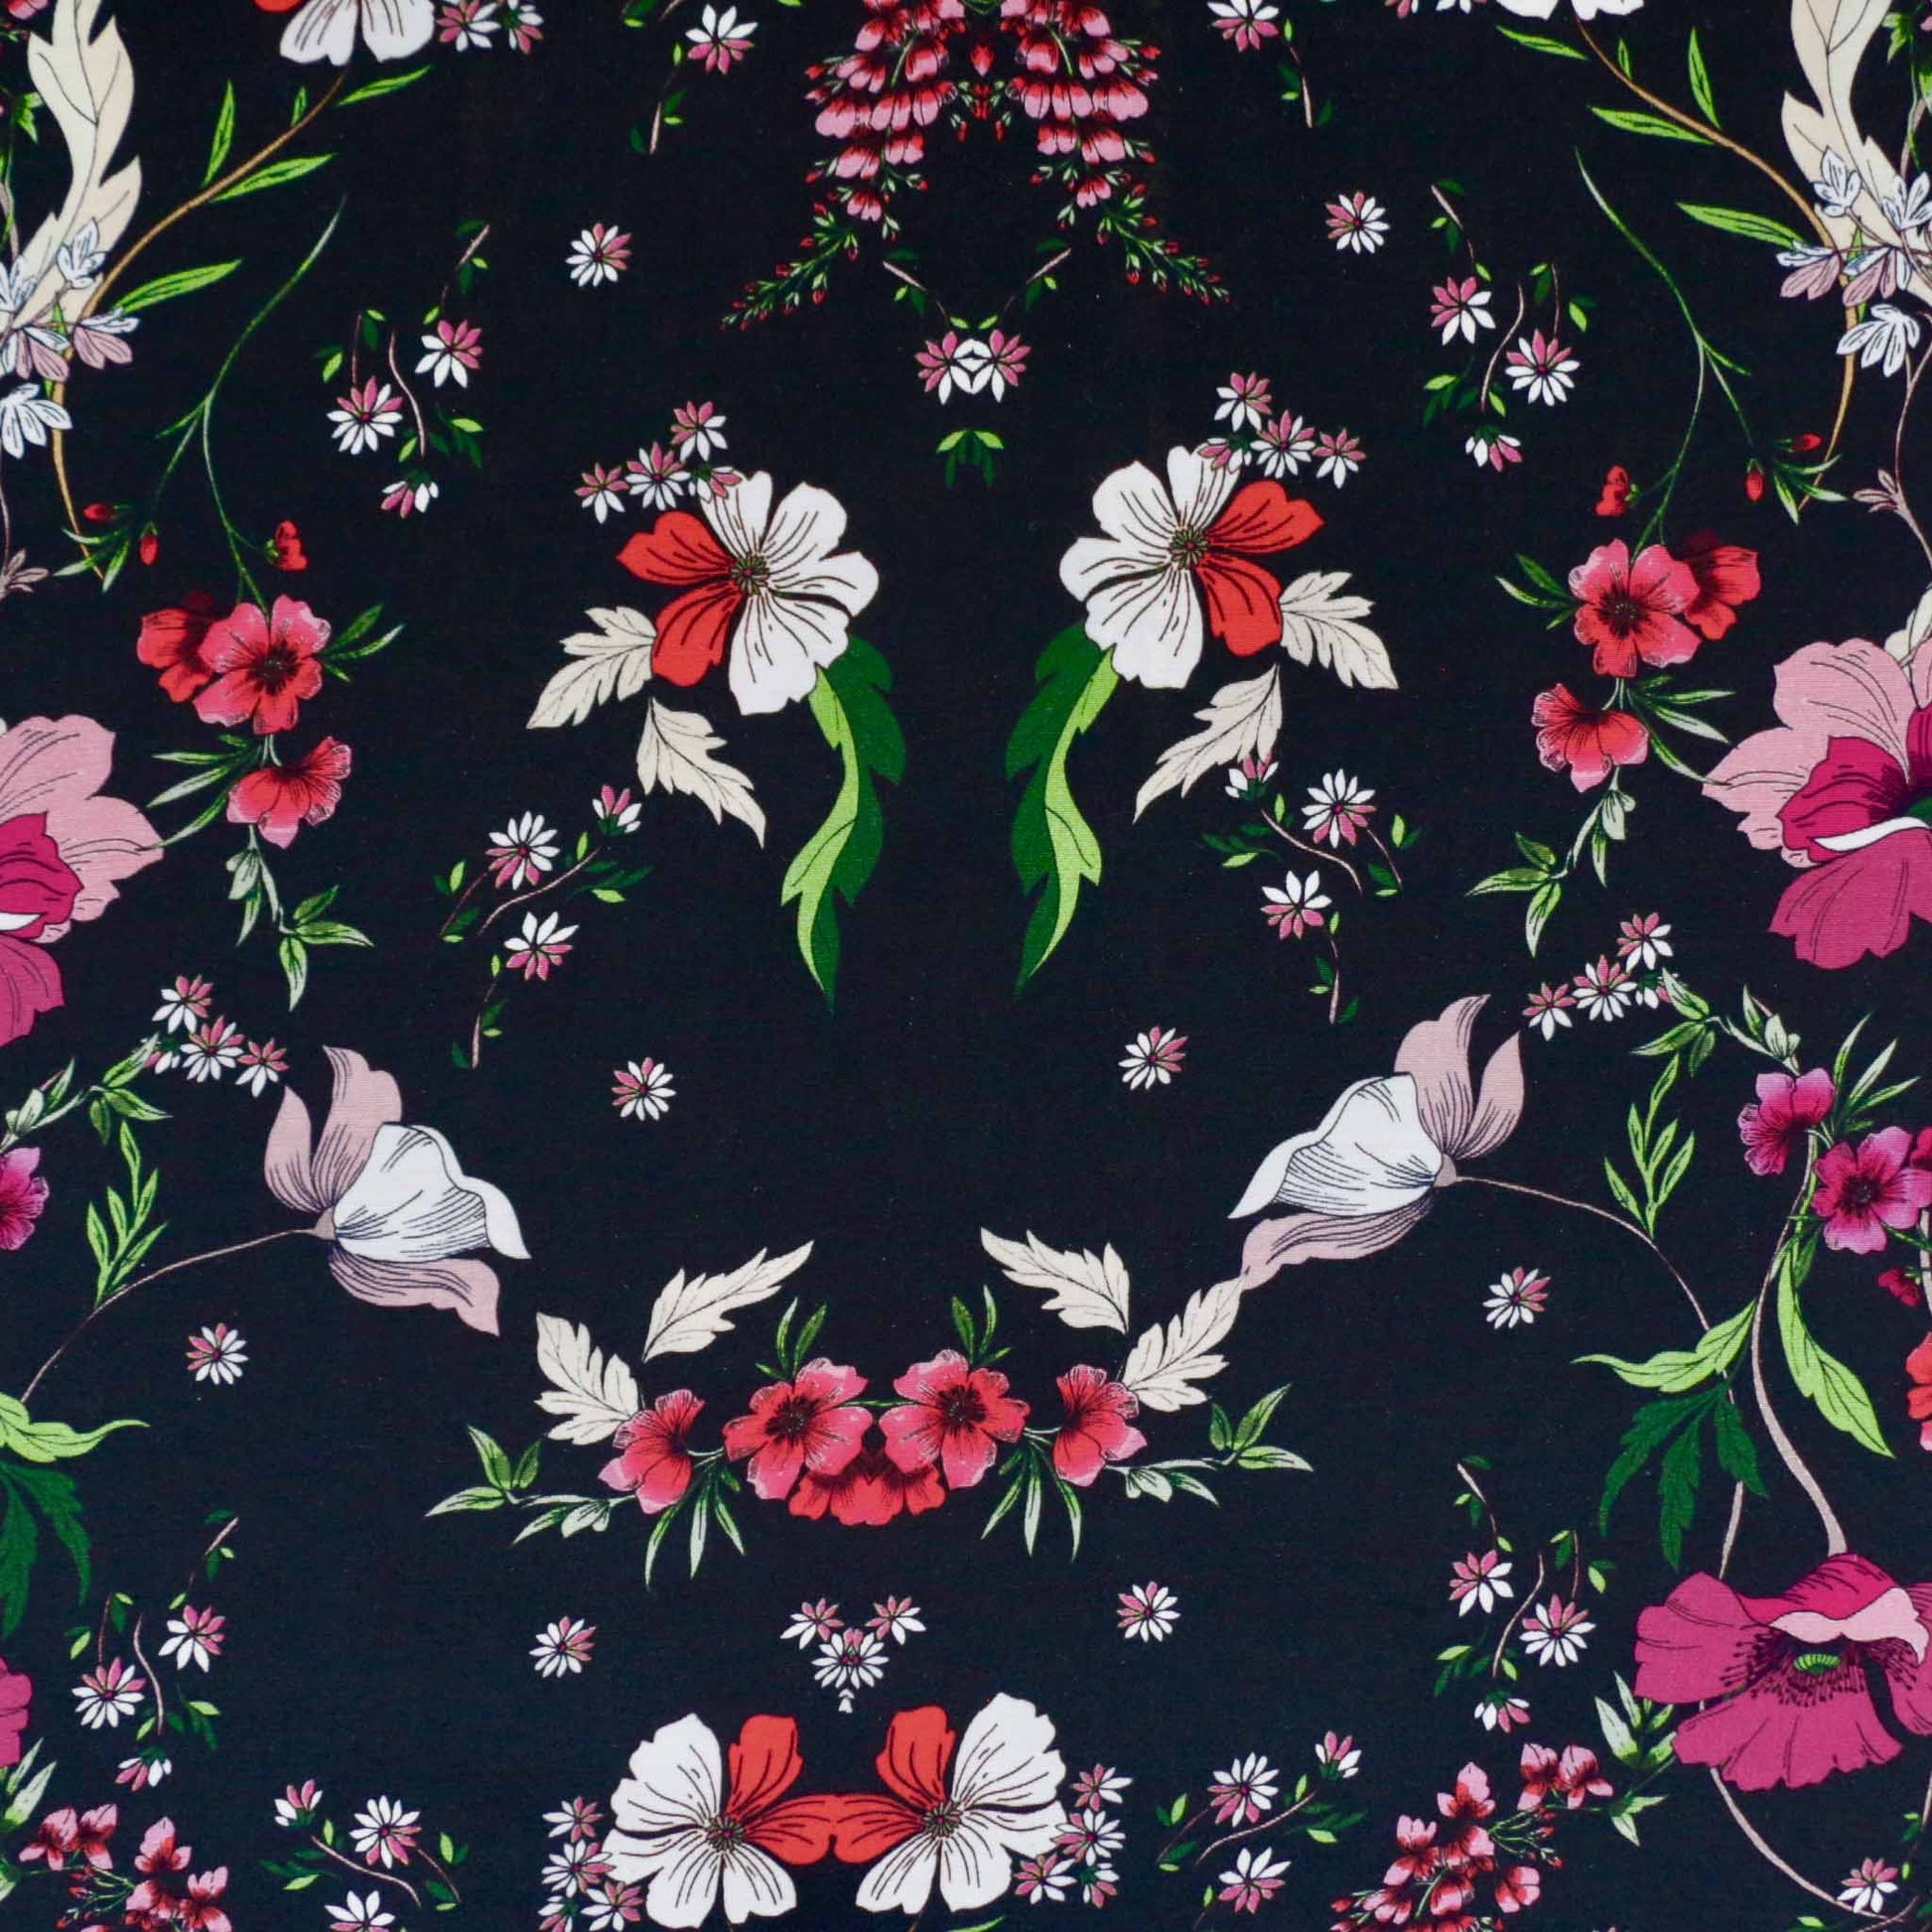 black viscose challis dressmaking rayon fabric with floral nature print design